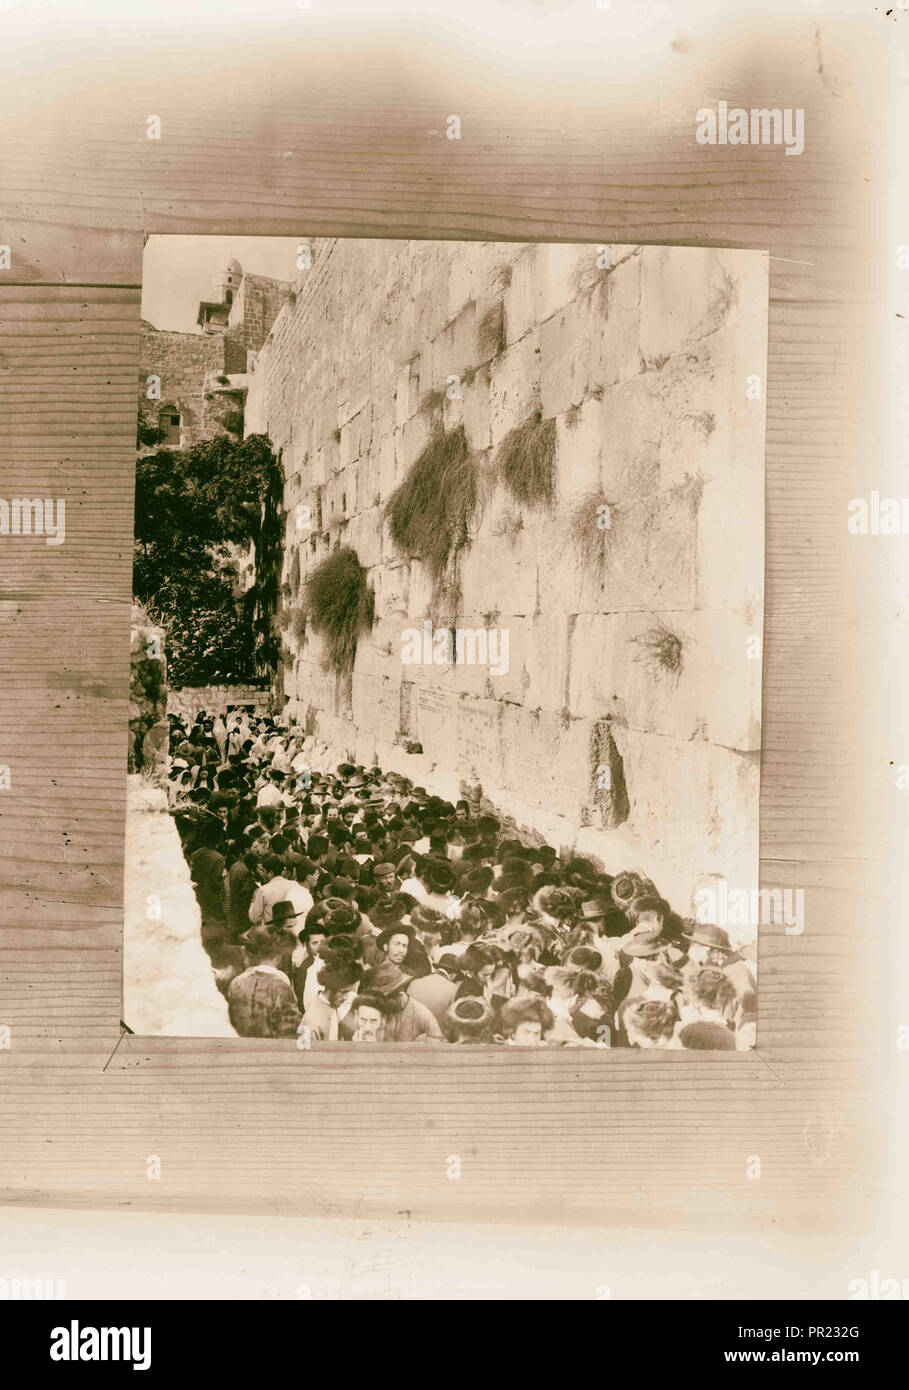 Jews Wailing Wall. Day of Atonement. 1934, Jerusalem, Israel Stock Photo